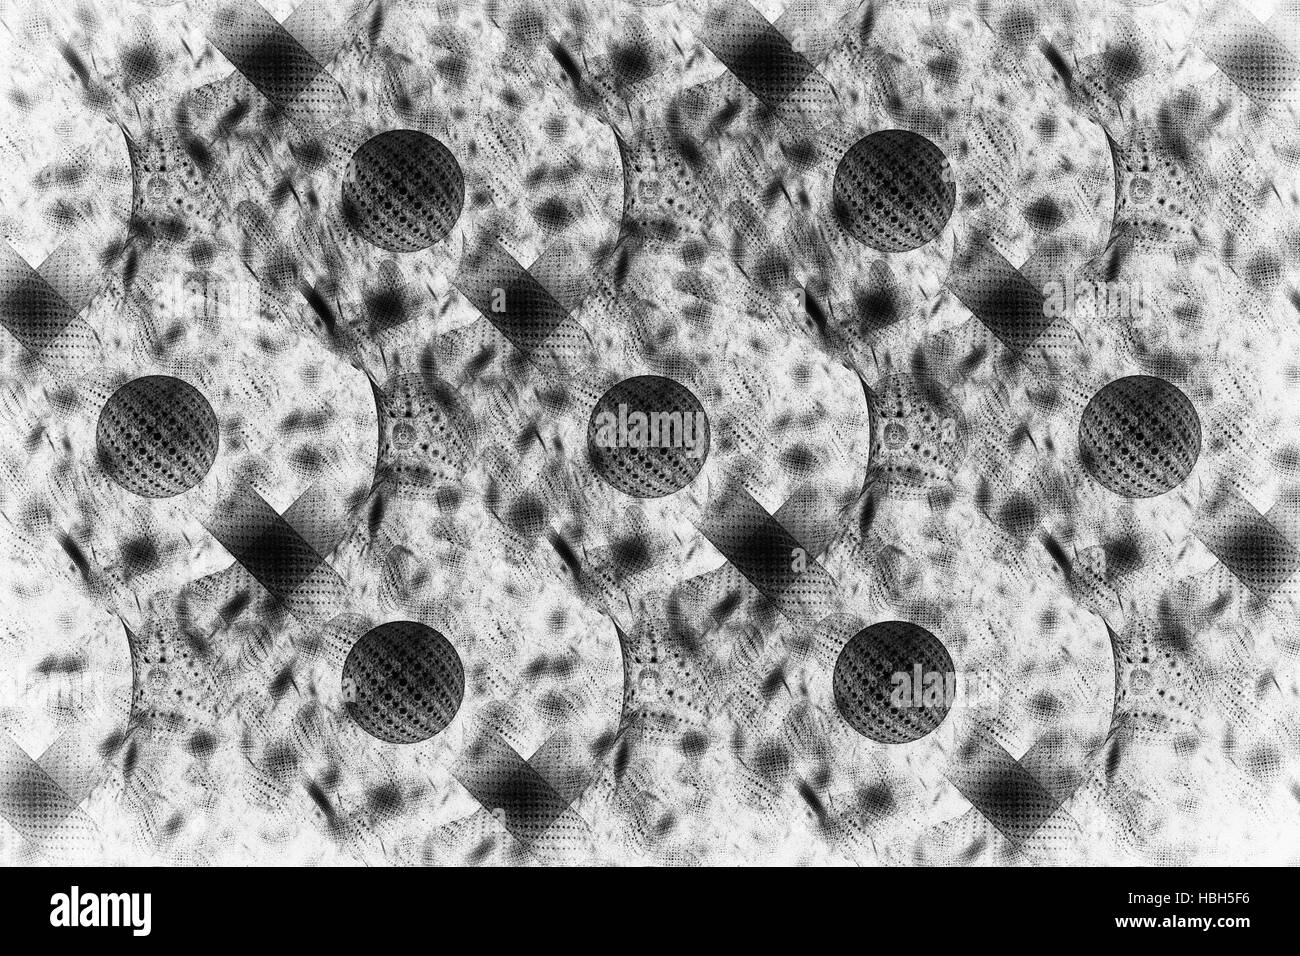 Fractal image: Mosaic balls Stock Photo